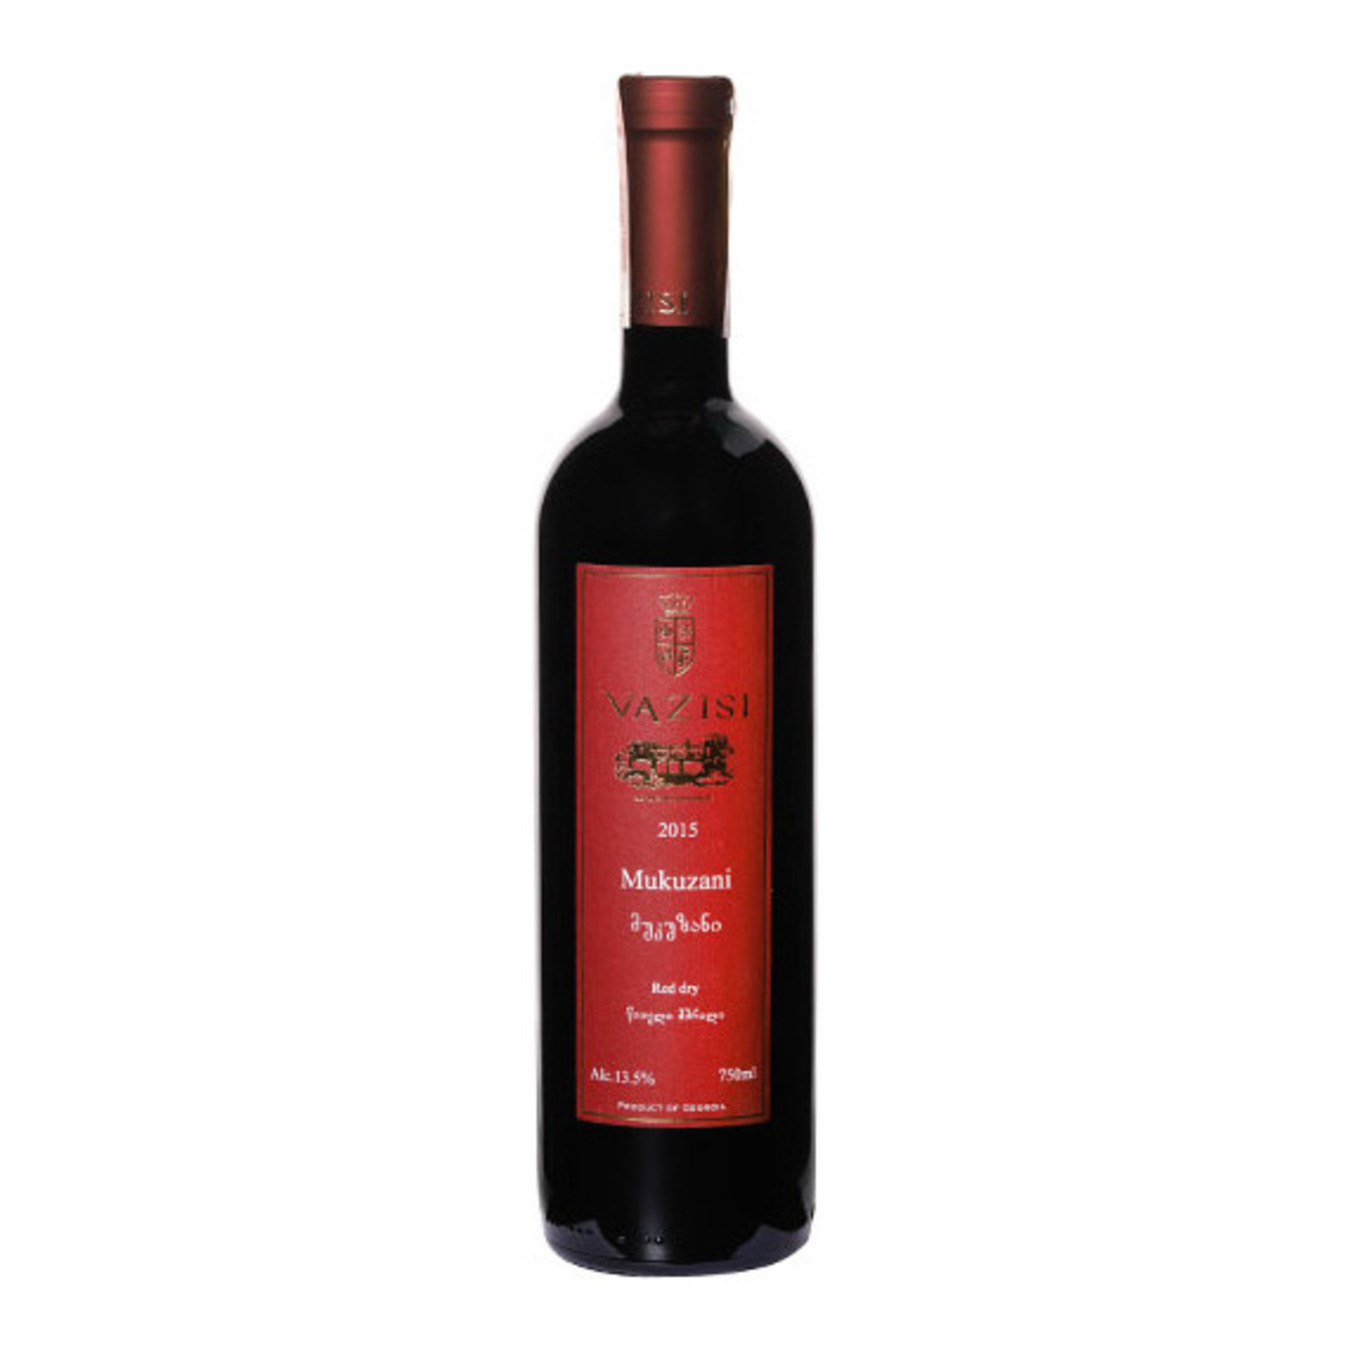 Wine Schuchmann Wines Georgia Vazisi Mukuzani red dry 13% 0,75l